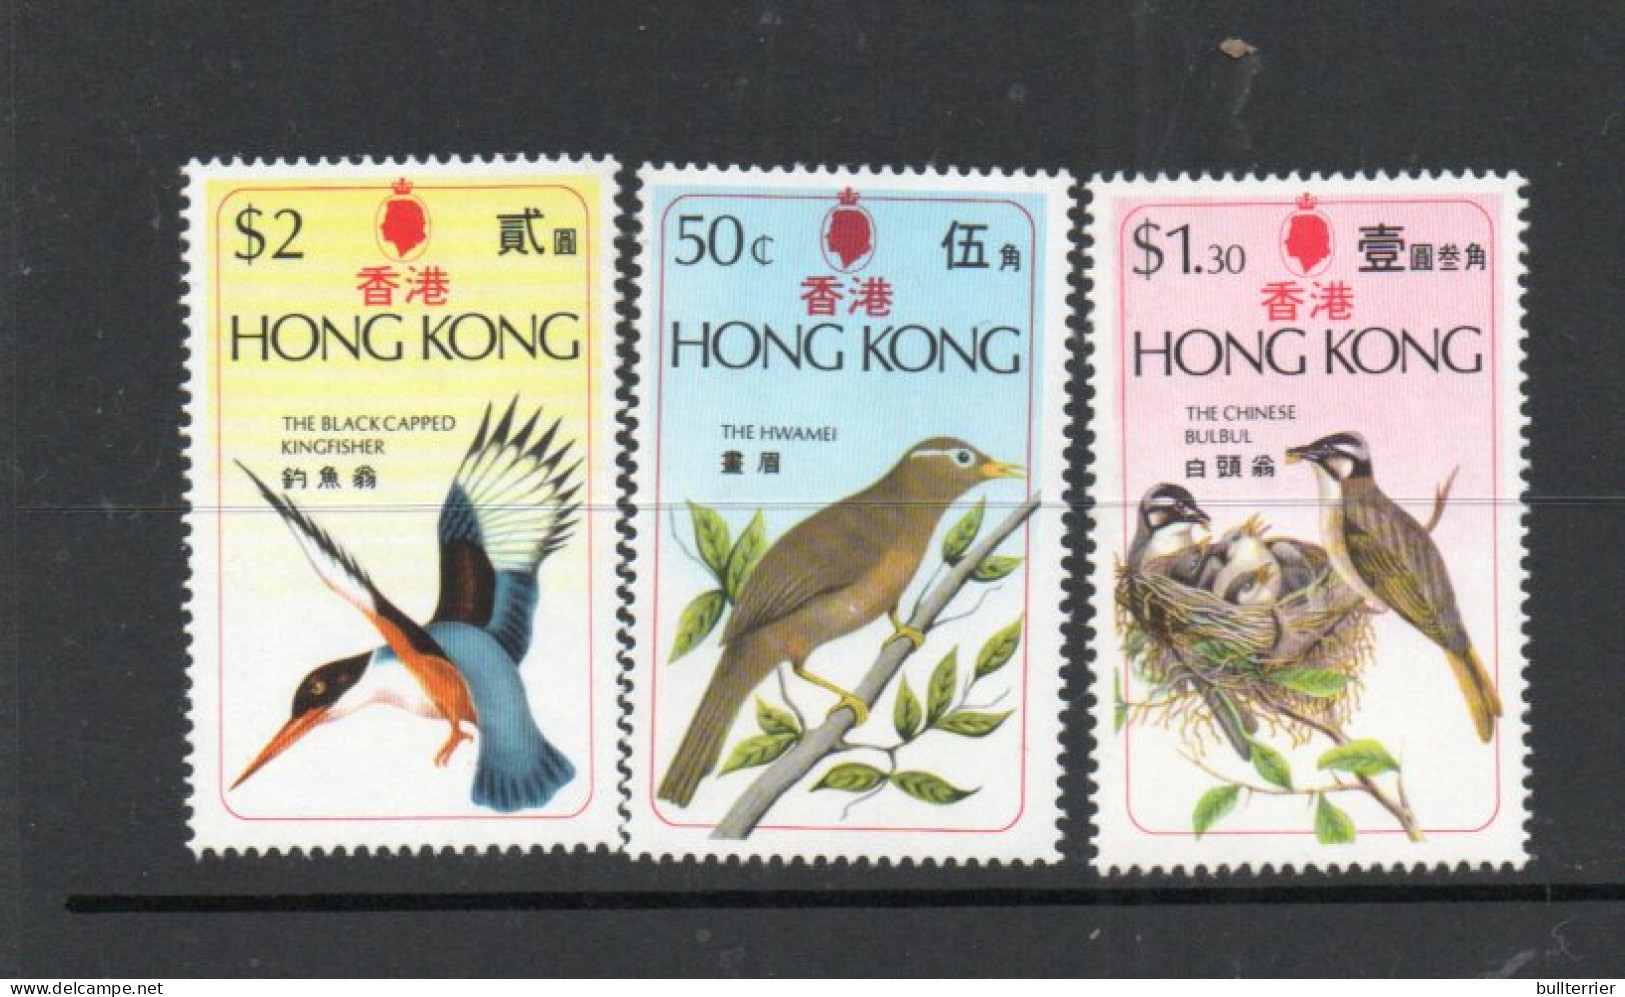 BIRDS - HONG KONG  - 1975- BIRDS SET OF 3  MINT NEVER HINGED, SG CAT £17 - Gallináceos & Faisanes